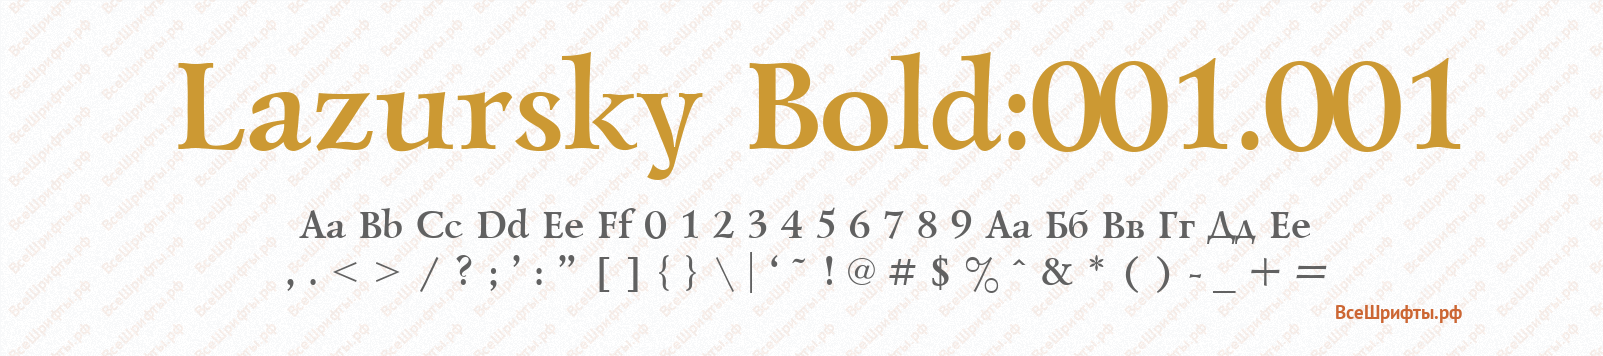 Шрифт Lazursky Bold:001.001